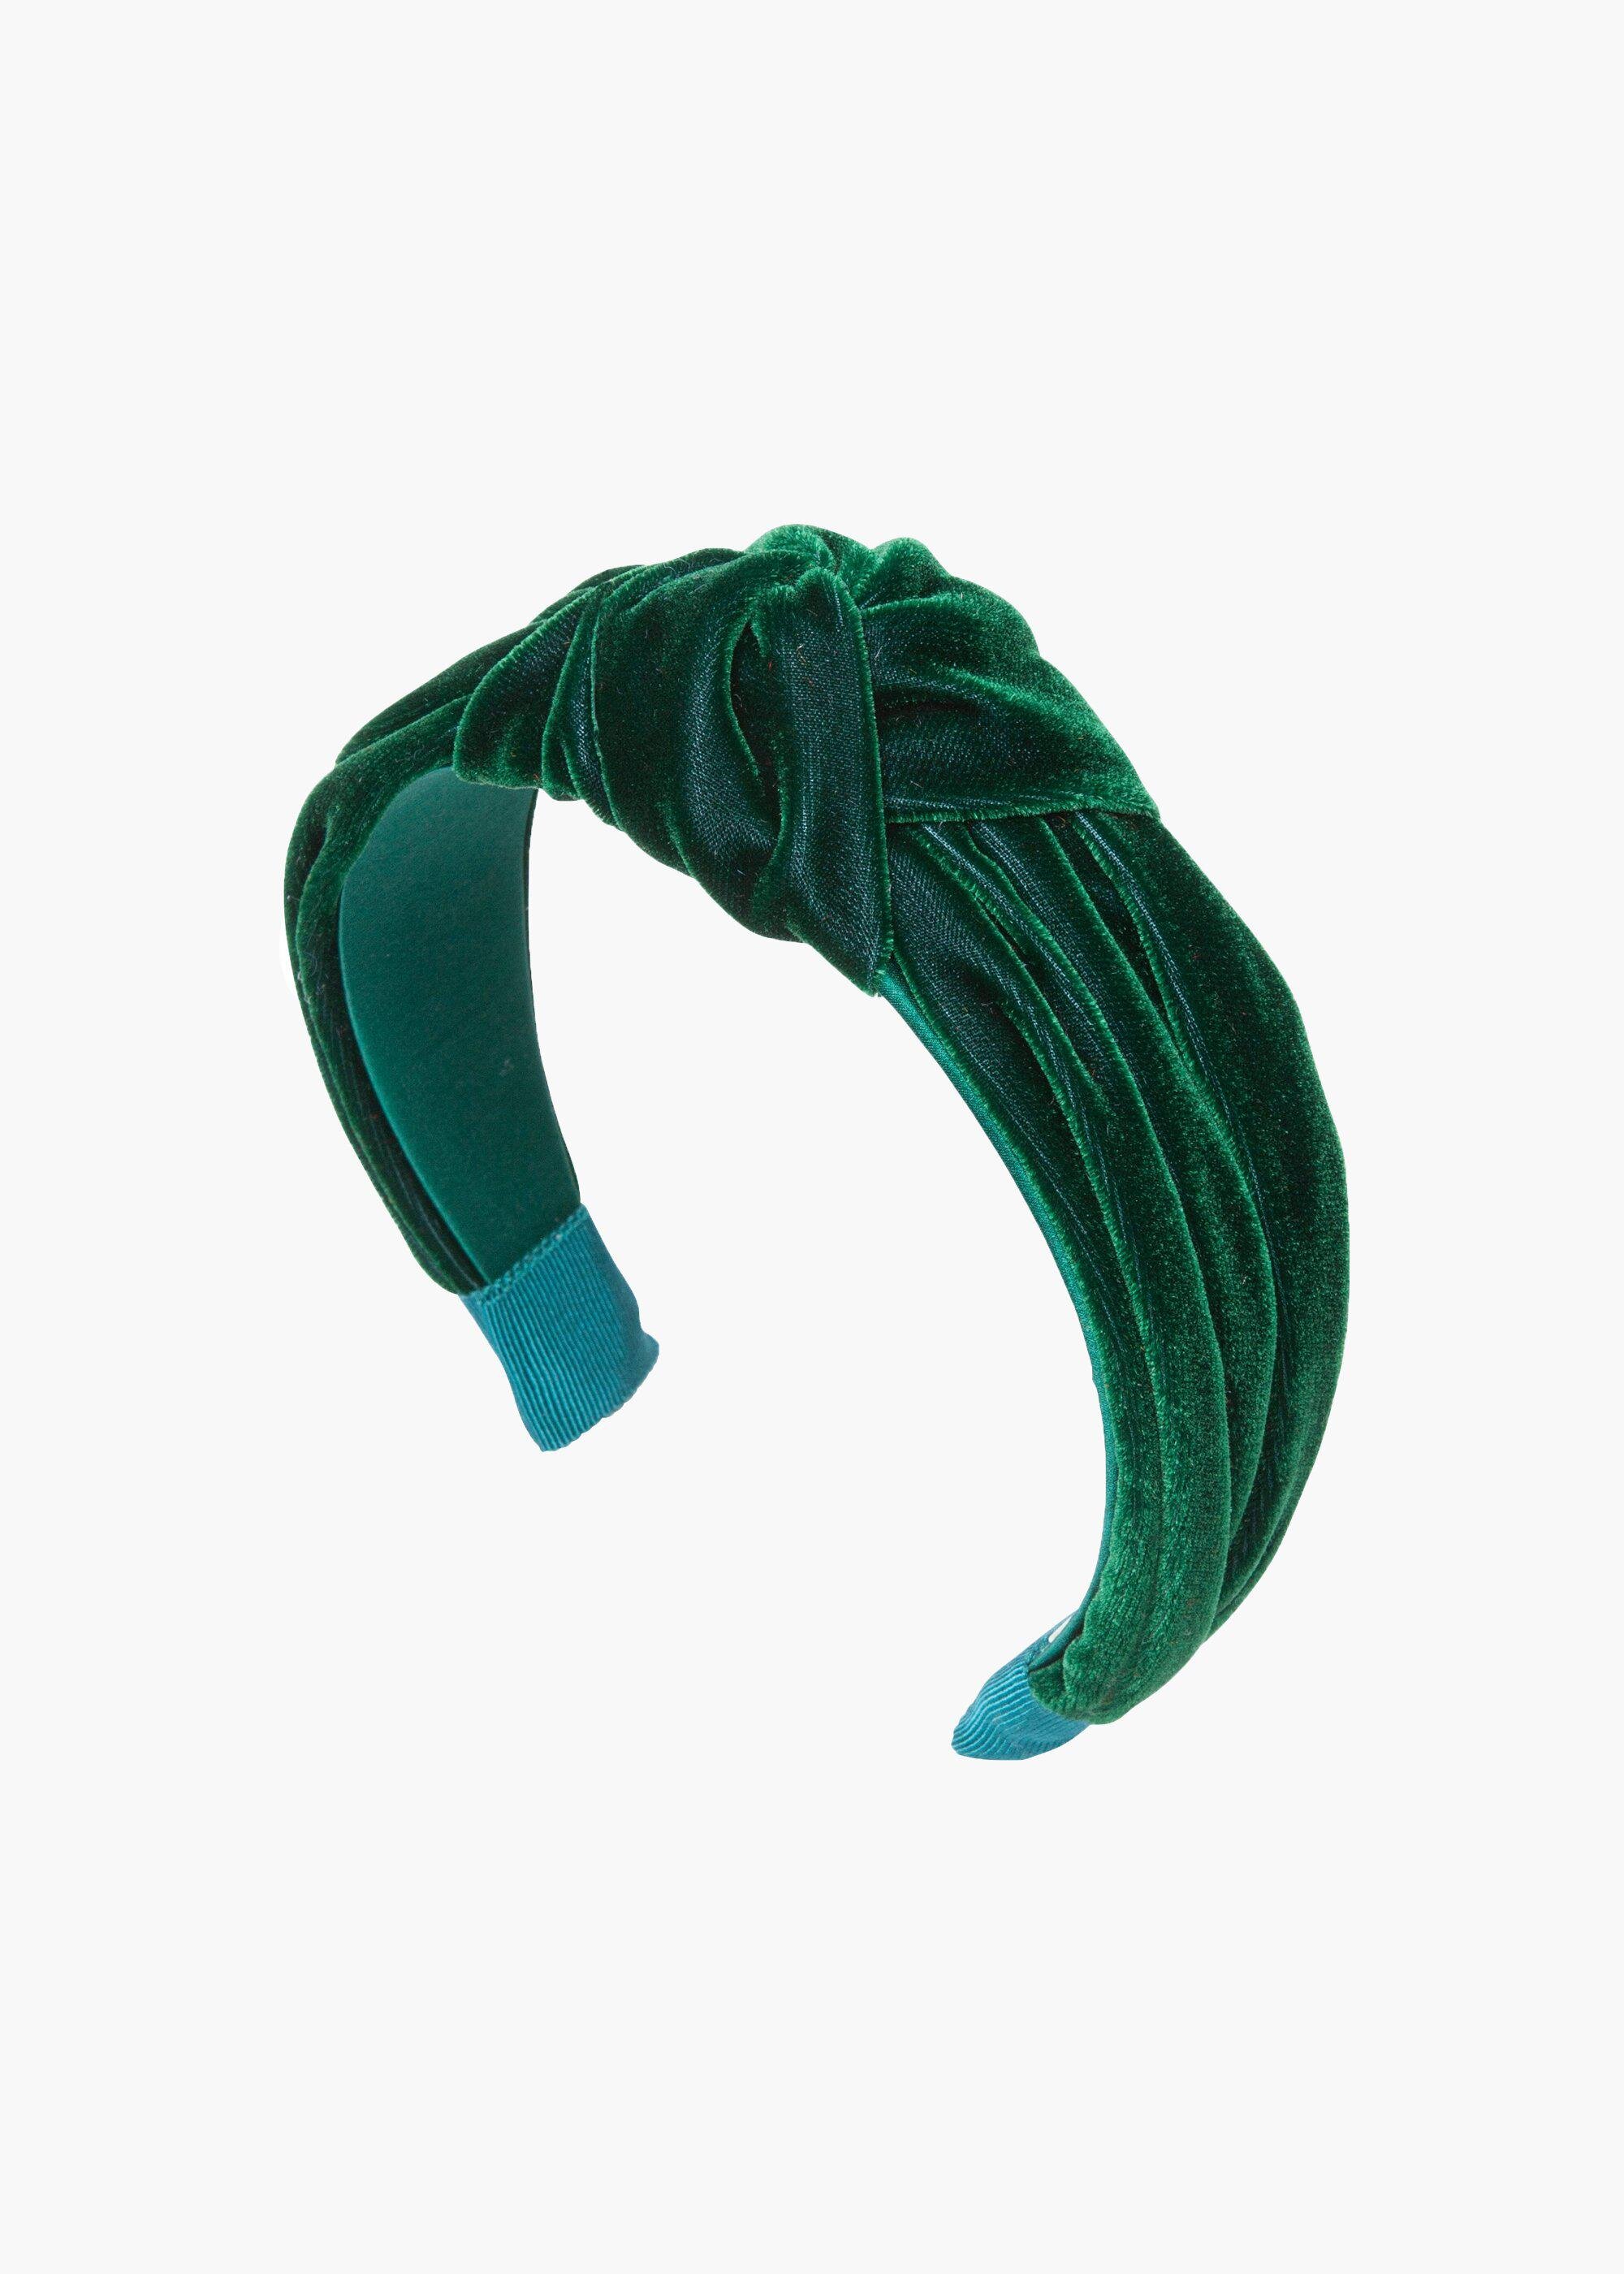 Jennifer Behr Rachael Headband in Emerald.jpg